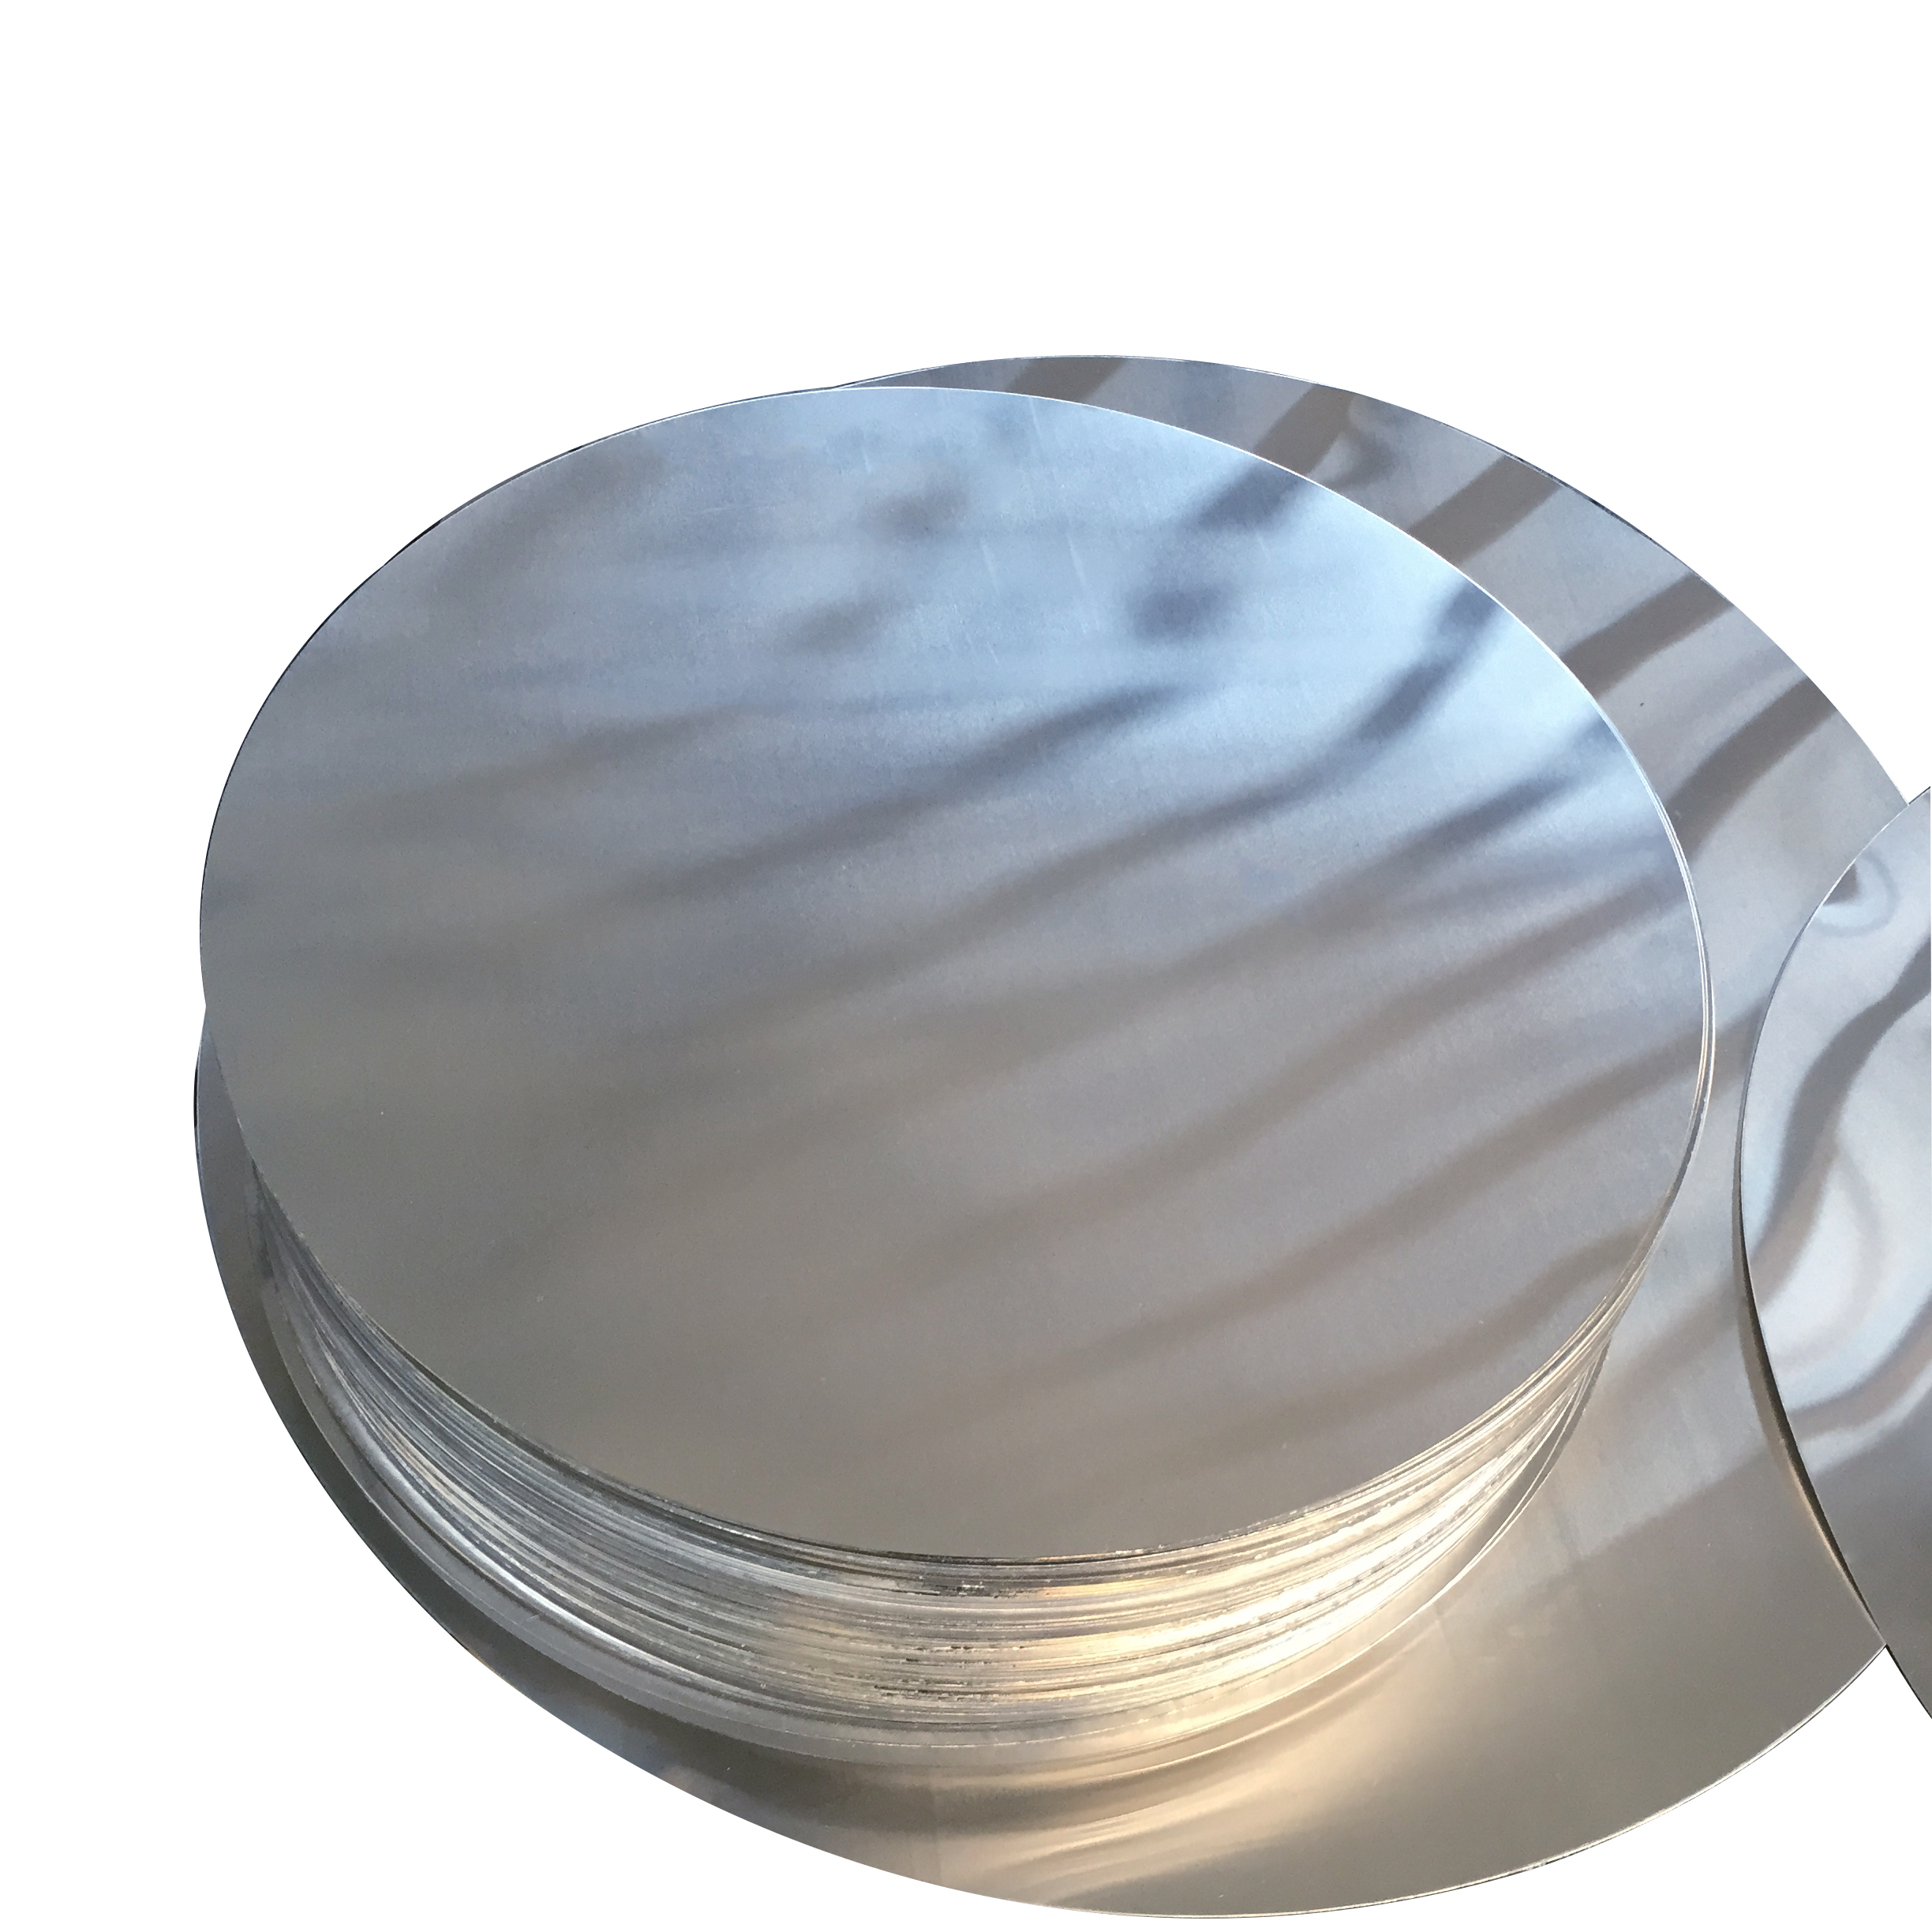 Food warmer Aluminum Disc/Circle for cookware kitchen utensils